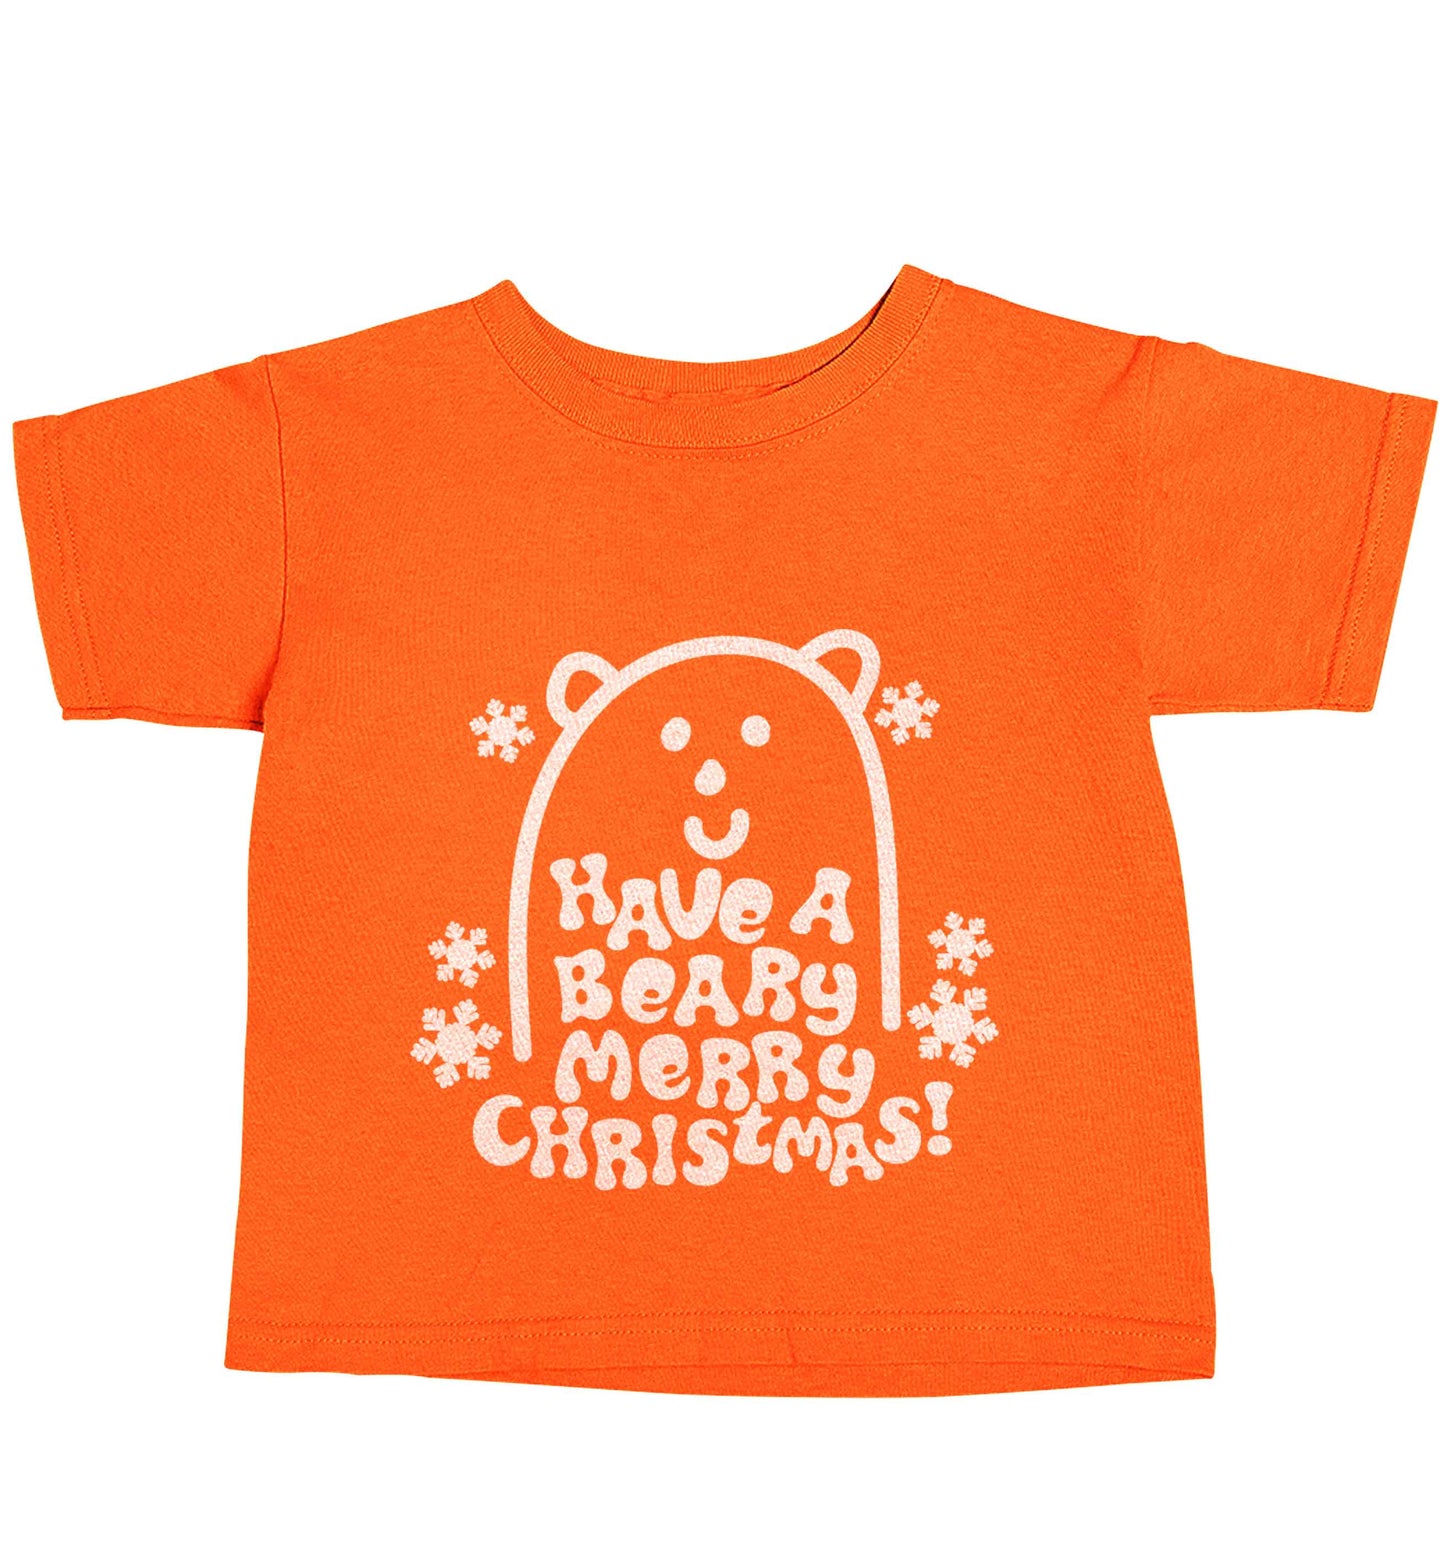 Save The Polar Bears orange baby toddler Tshirt 2 Years